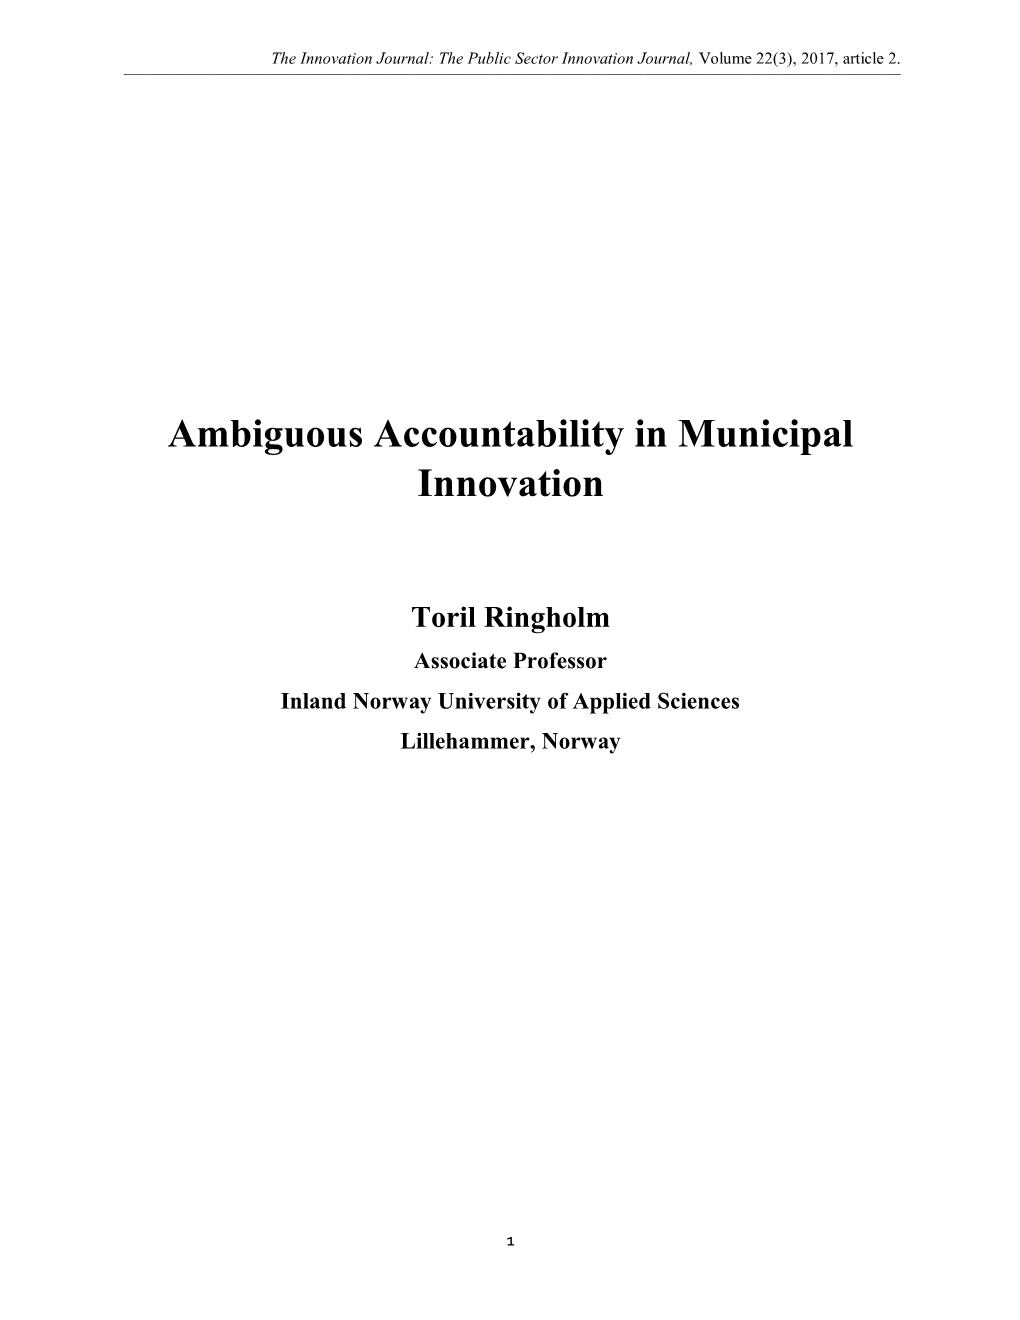 Ambiguous Accountability in Municipal Innovation